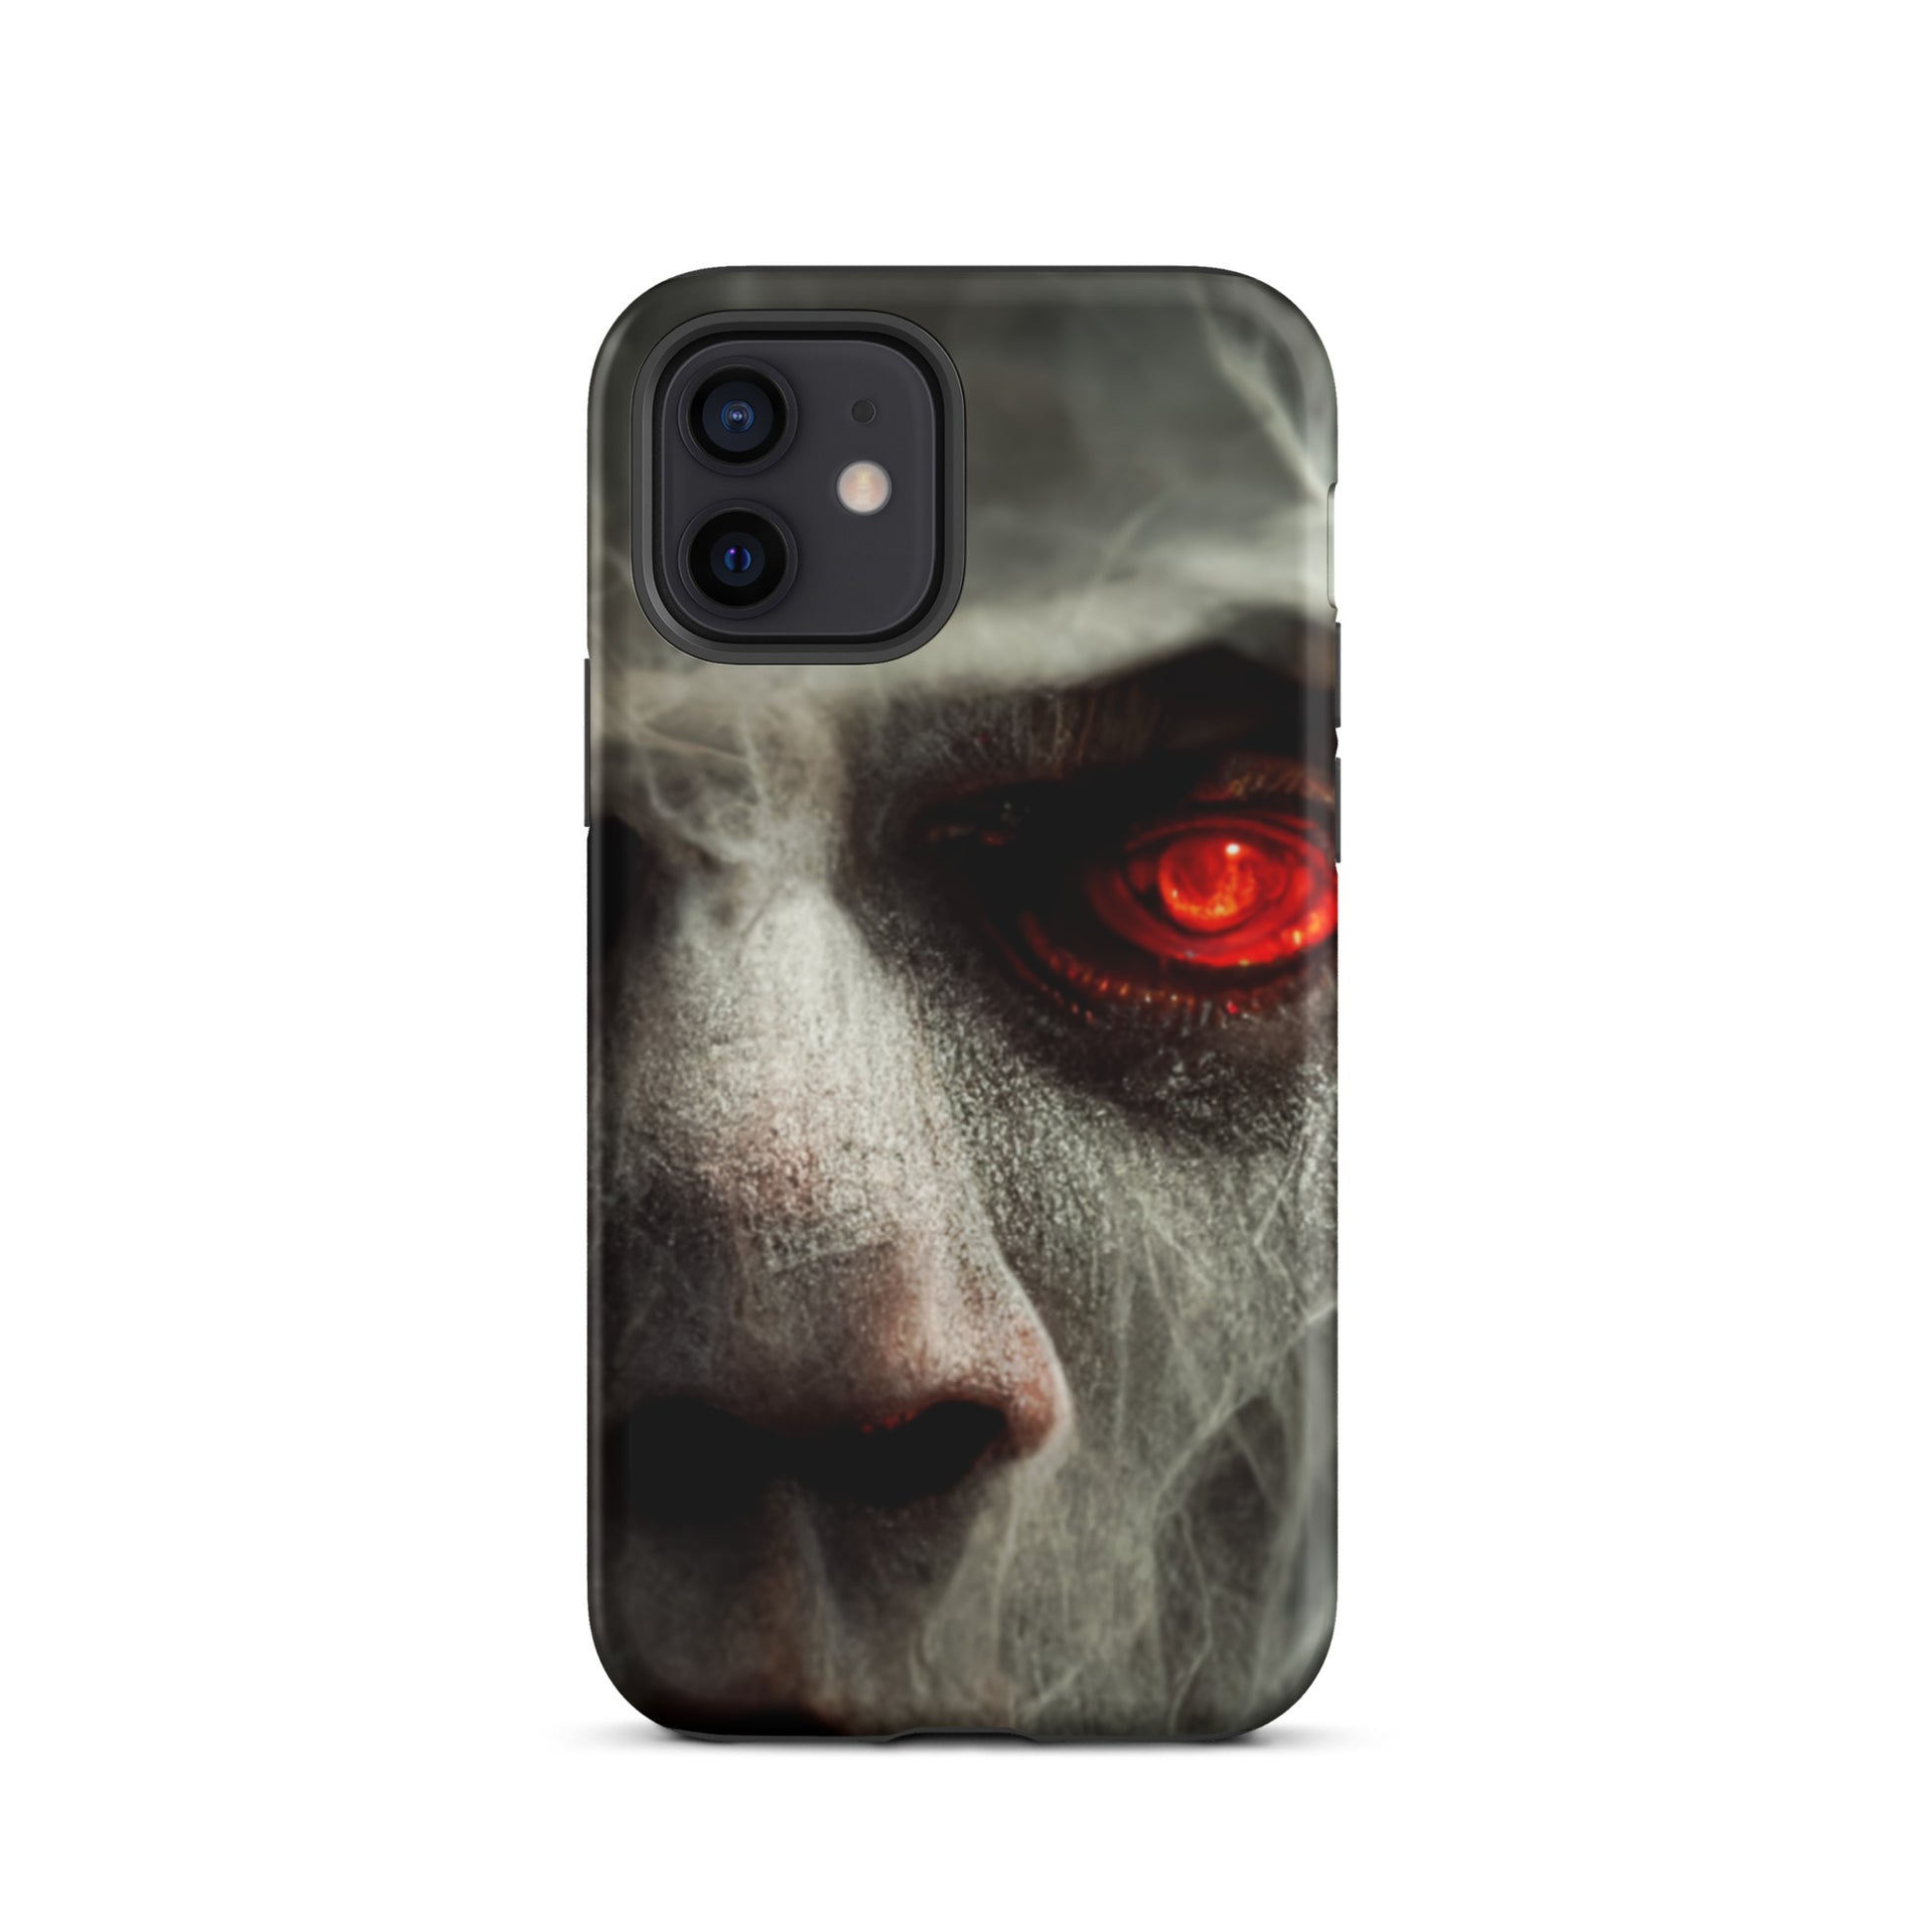 Maraheim Spectre Tough iPhone case - Nick Olsson Digital Design